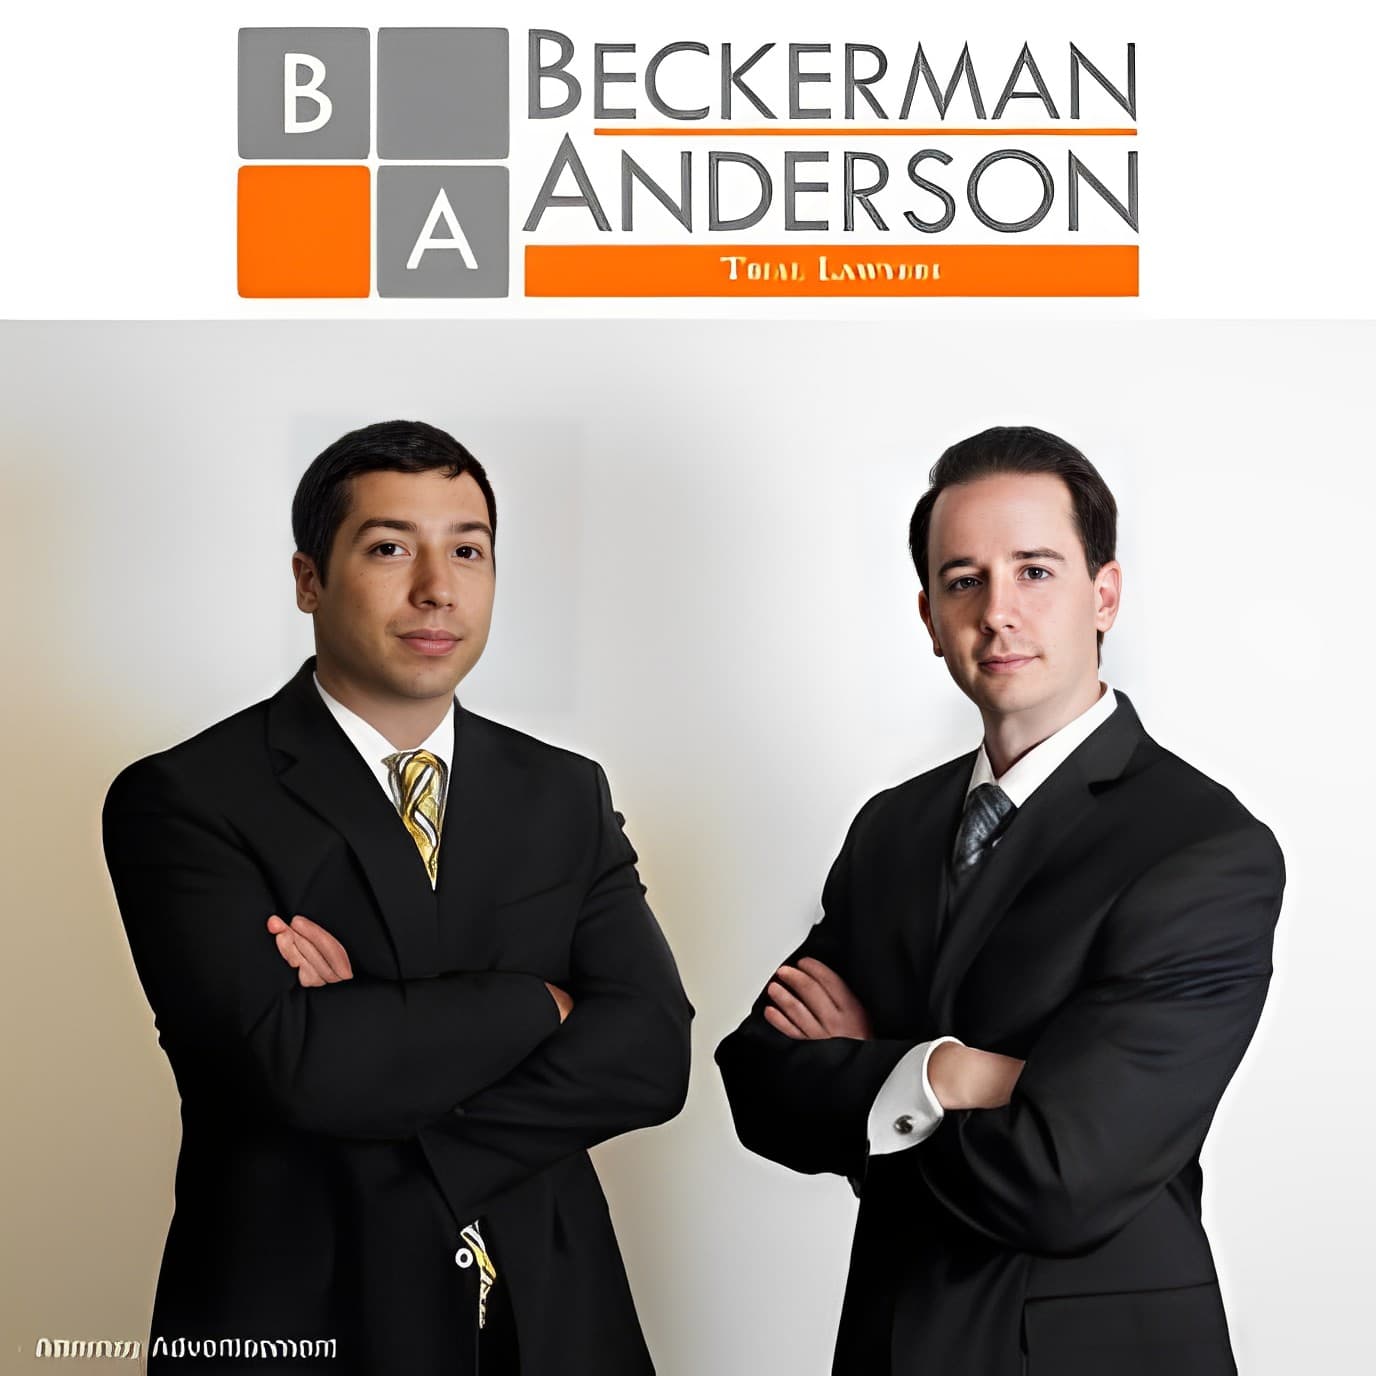 Beckerman Anderson, APC - Costa Mesa, CA, US, personal injury